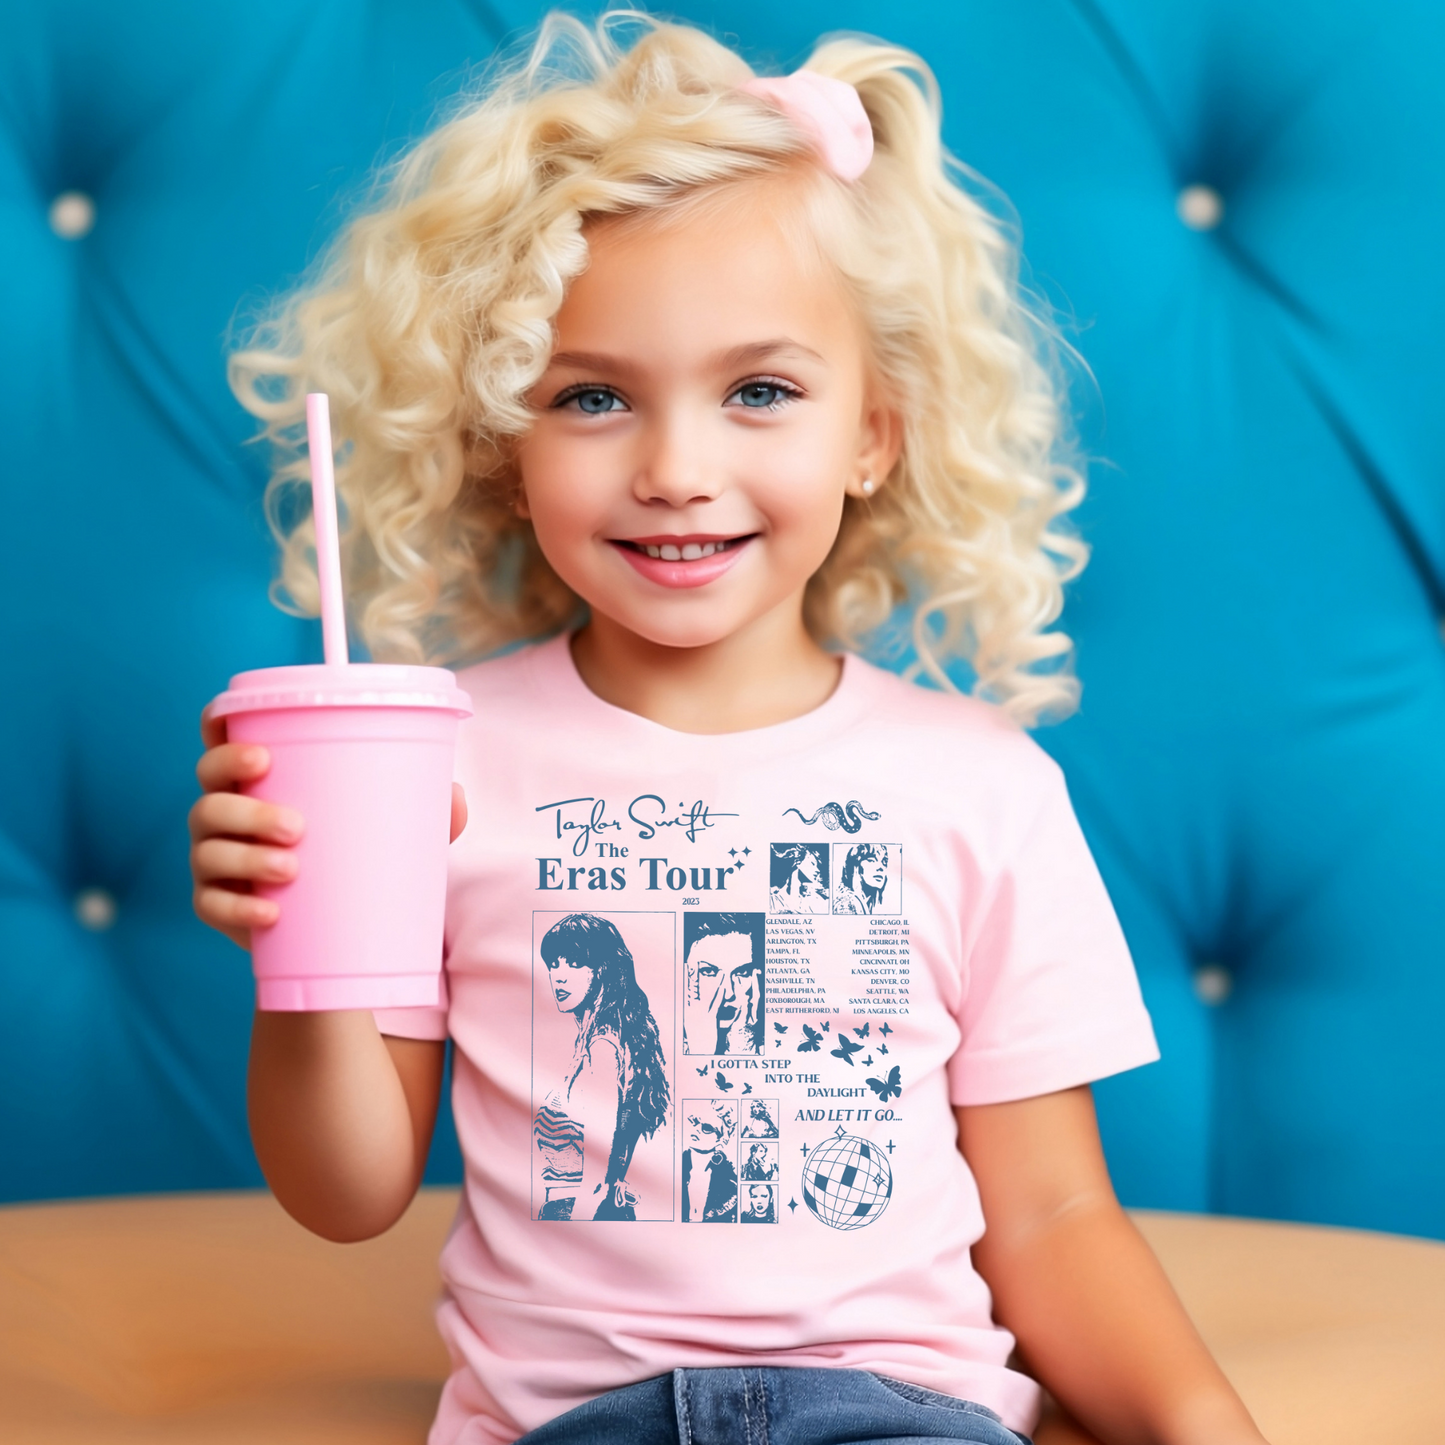 Tay Swift inspired shirt | Kids shirt | Eras Tour shirt